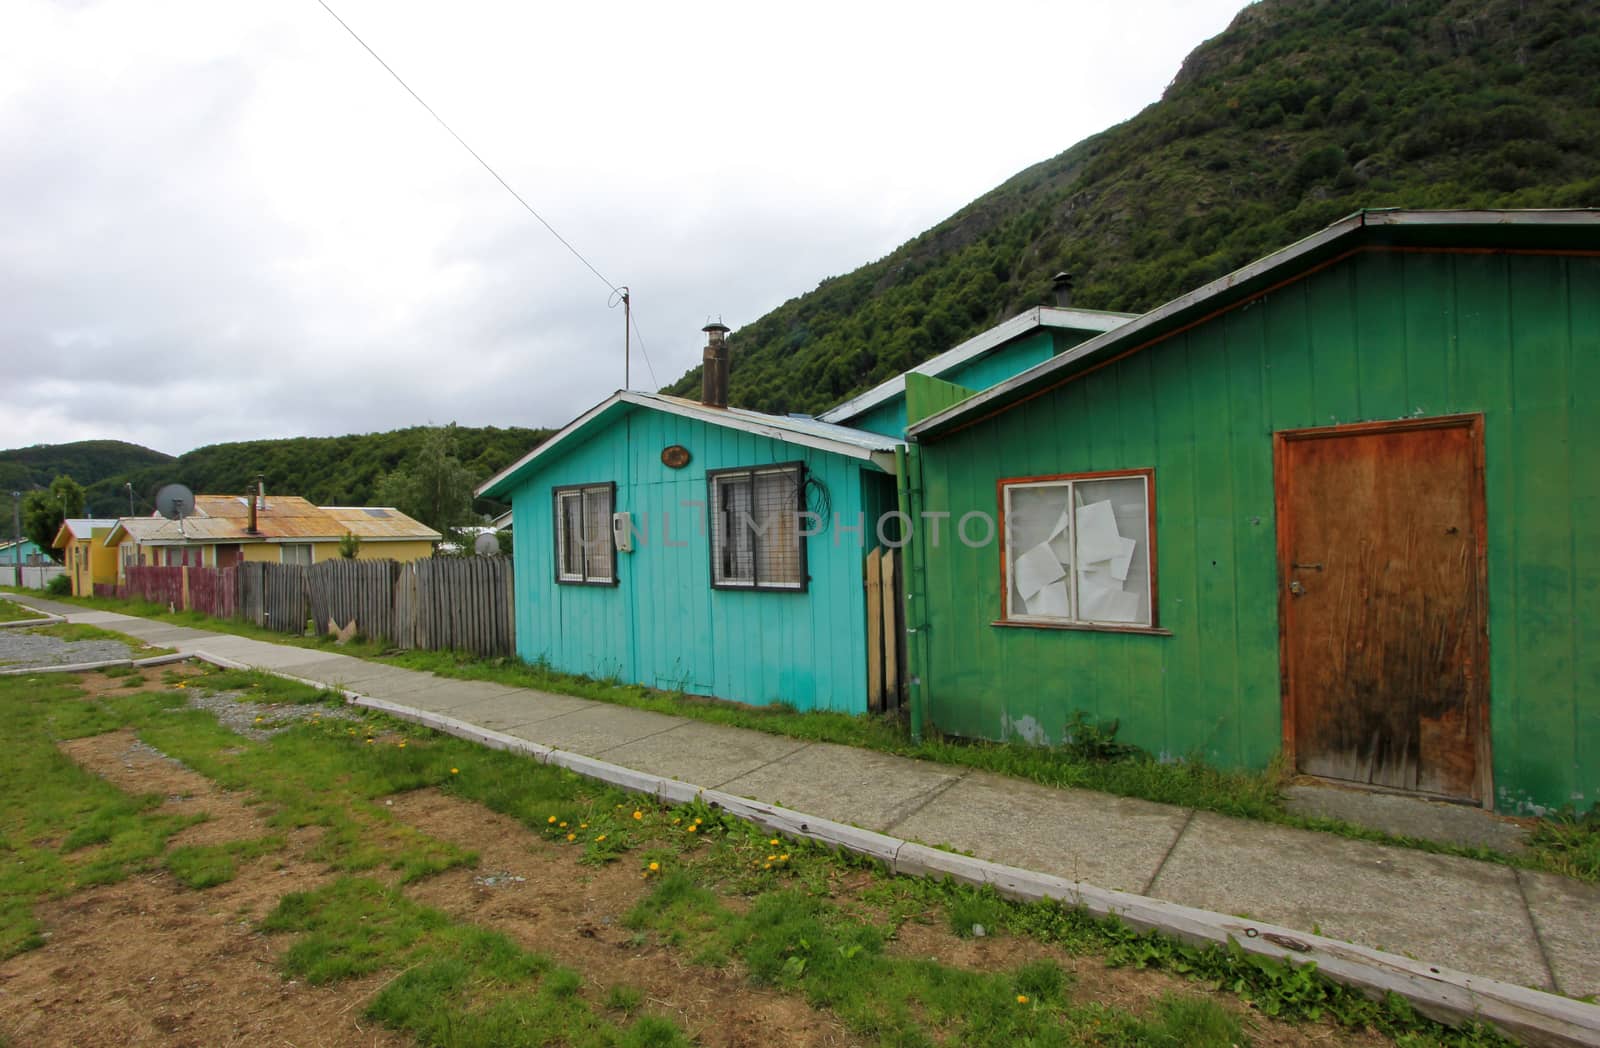 Houses in Villa O'Higgins, Carretera Austral, Chile by cicloco